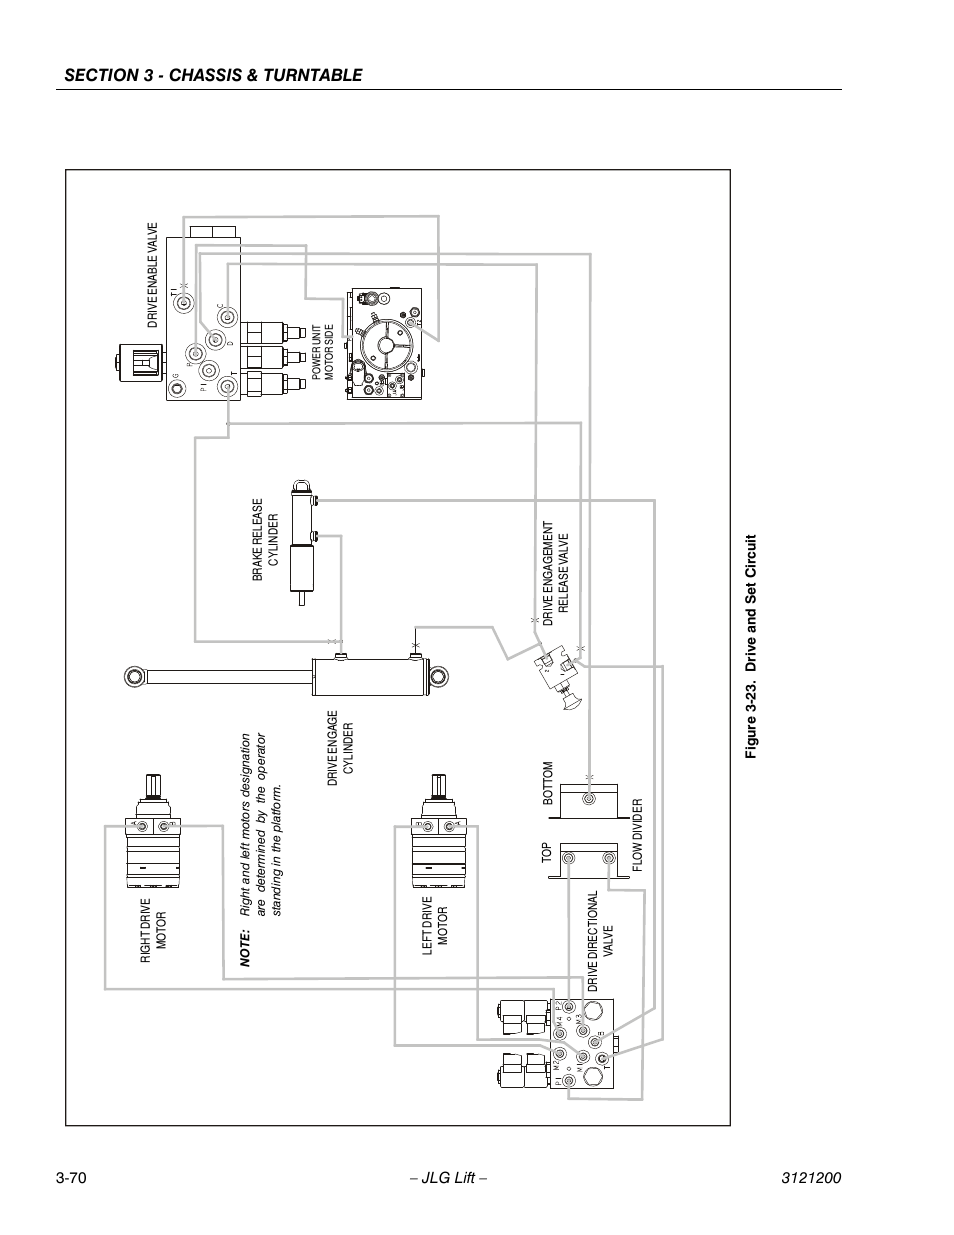 Drive and set circuit -70 | JLG T500J Service Manual User Manual | Page